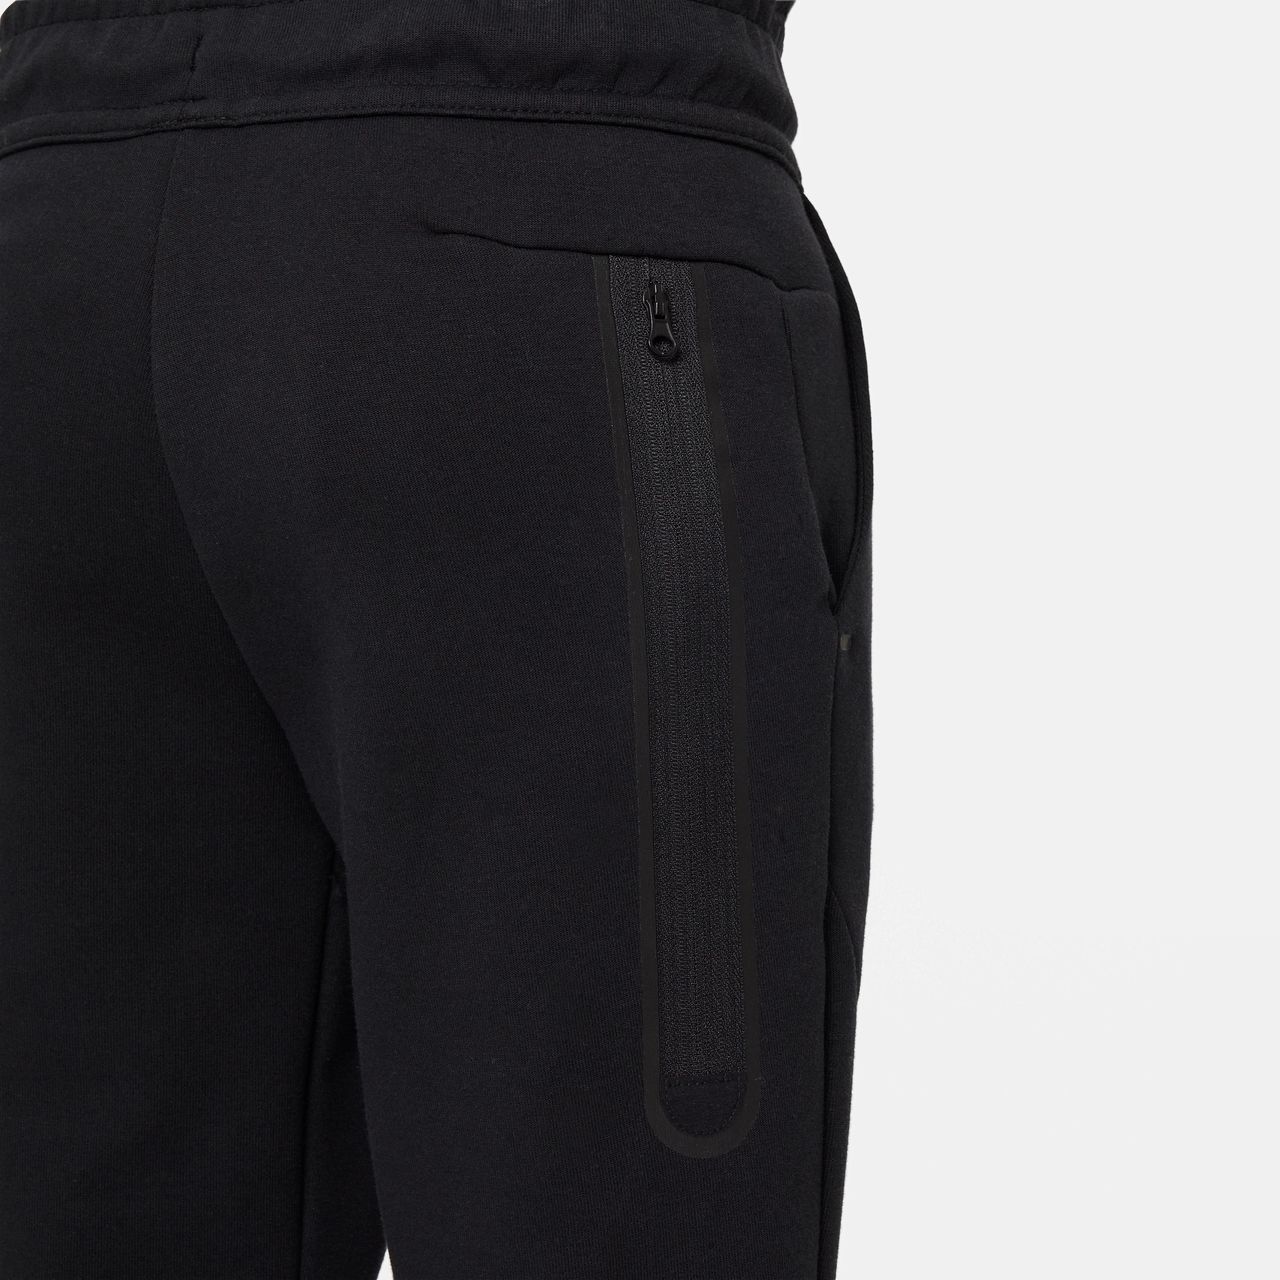 Nike Sportswear Tech Fleece Hose für ältere Kinder (Jungen) - Schwarz